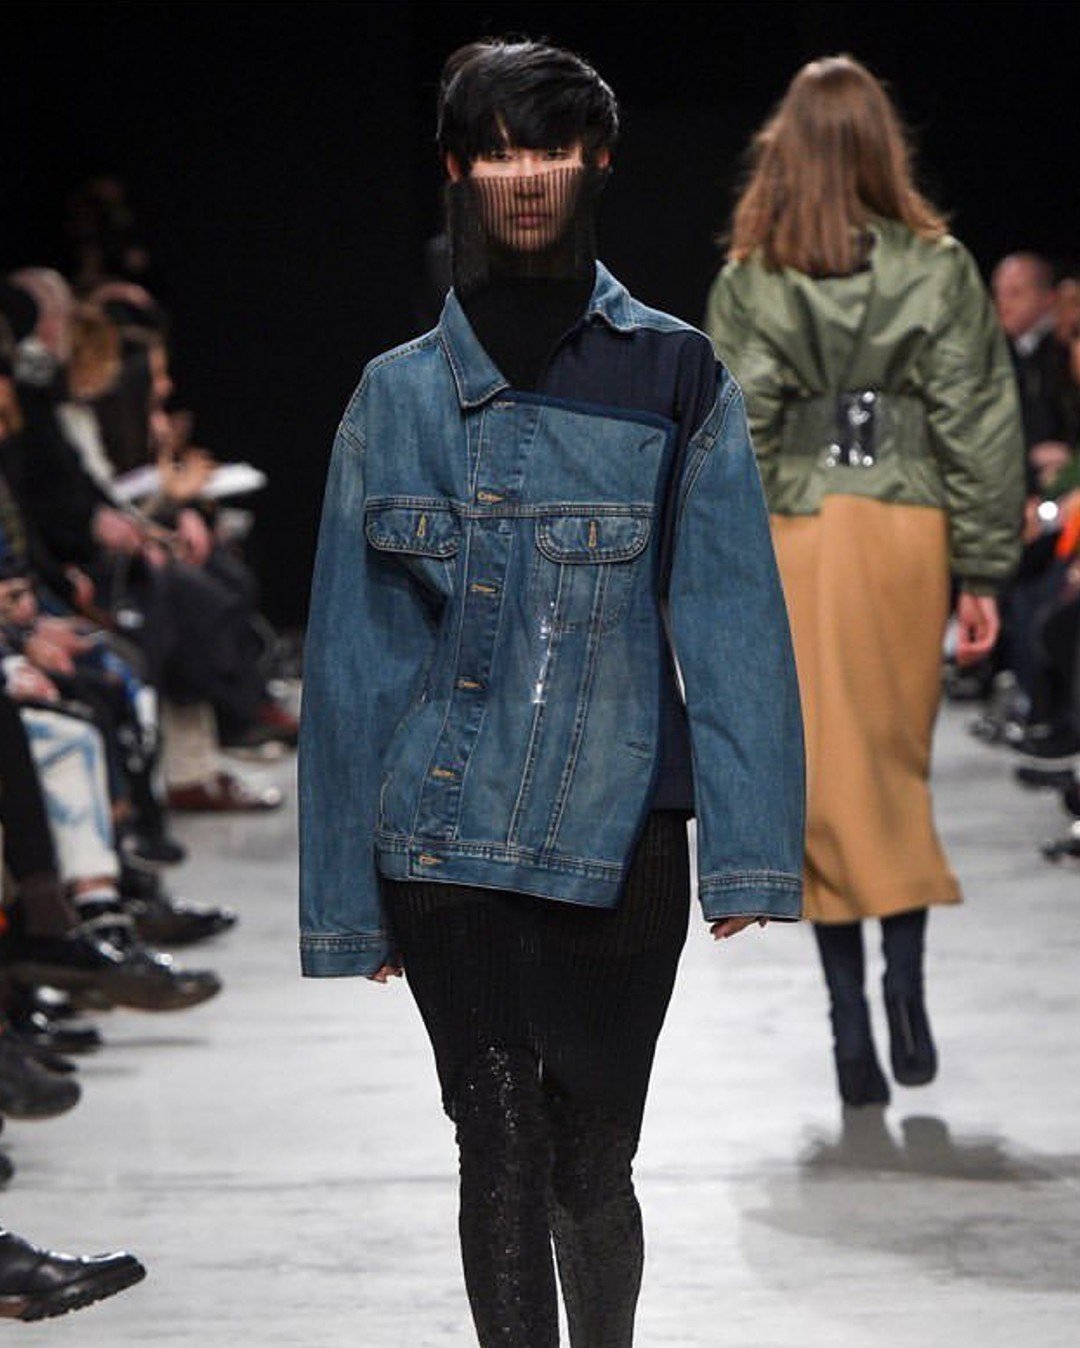 Lutz - jeans - Paris Fashion Week - inverno - Paris - https://stealthelook.com.br